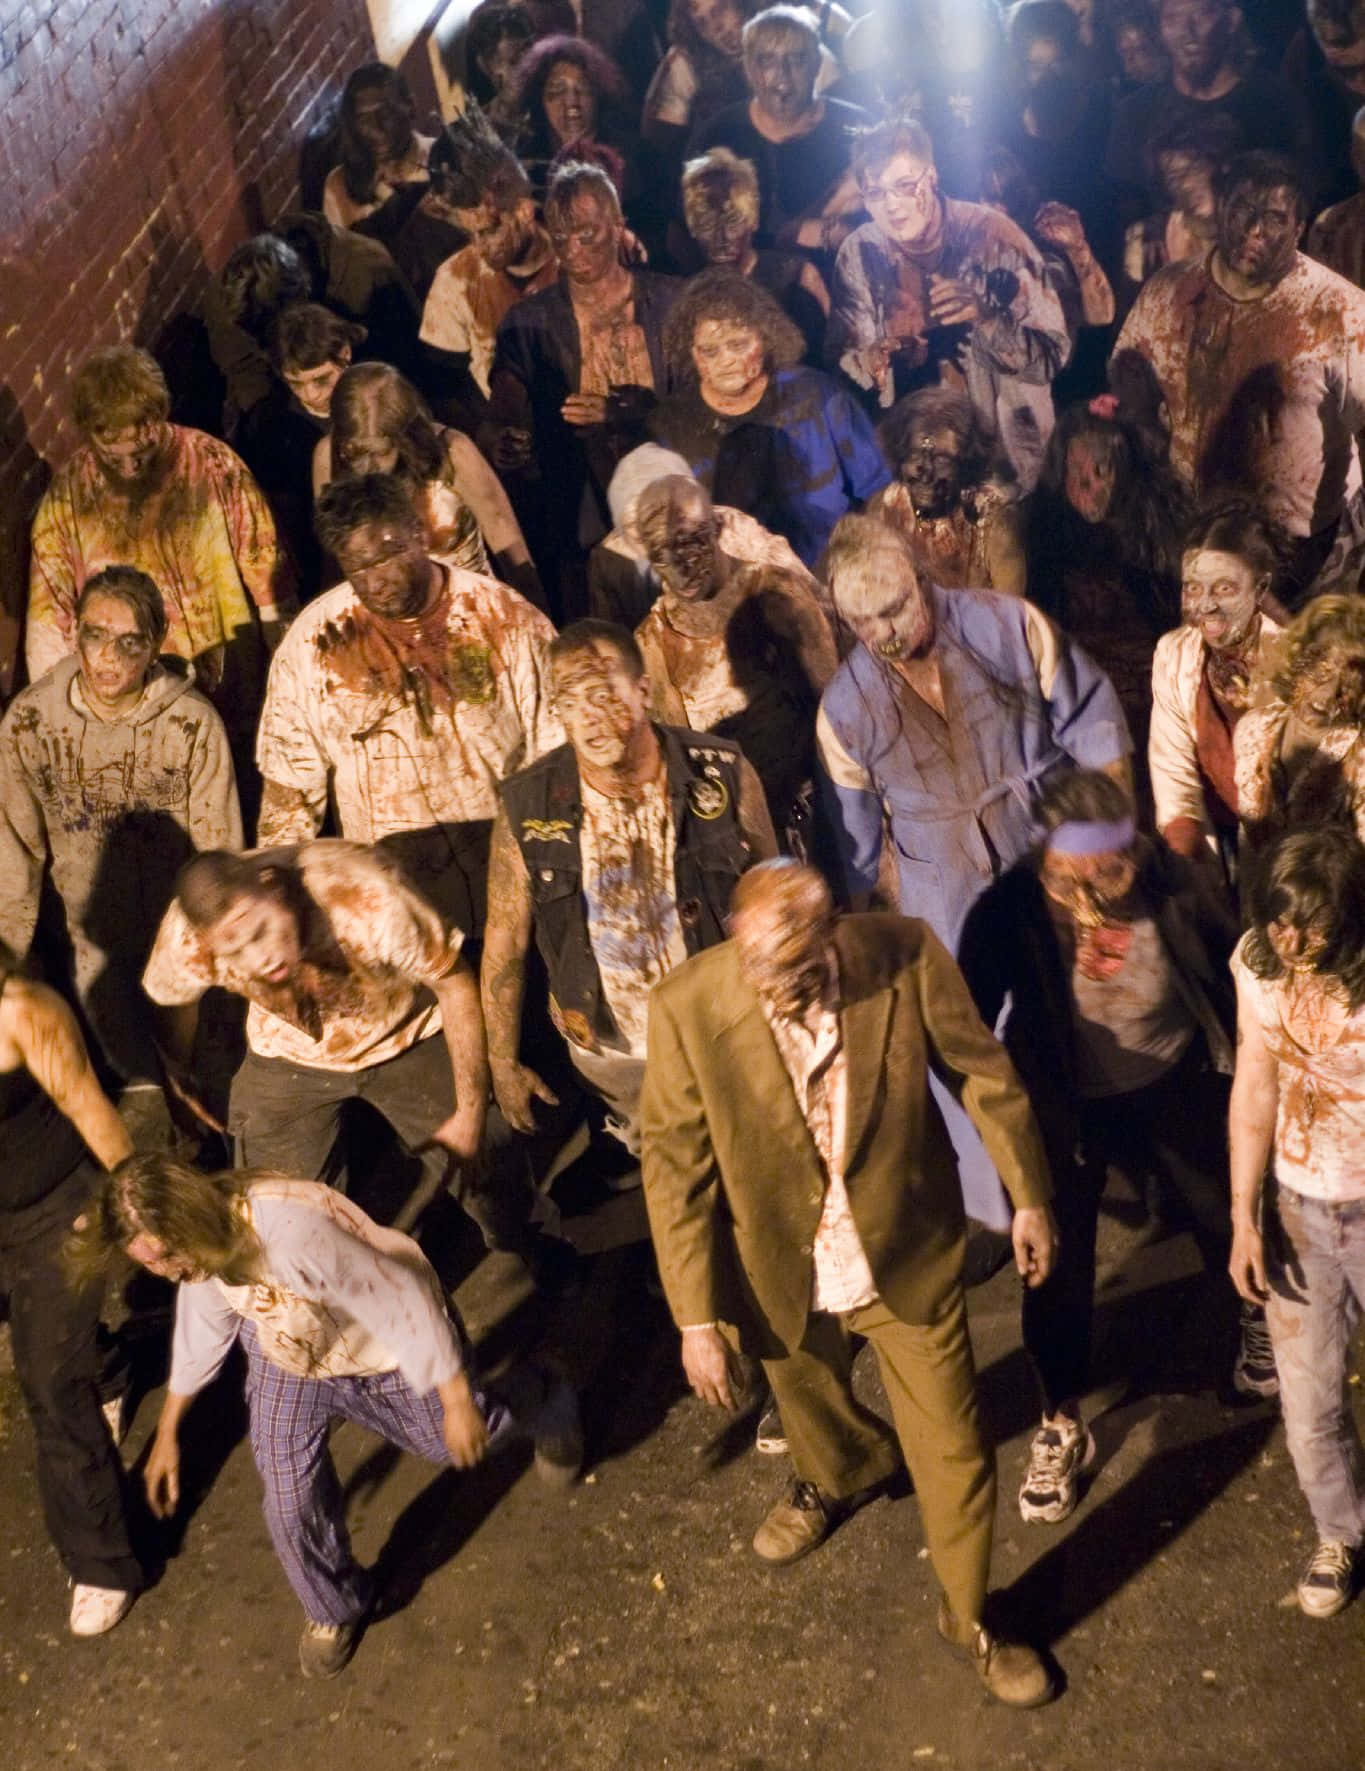 zombies in a crowd walking down a street